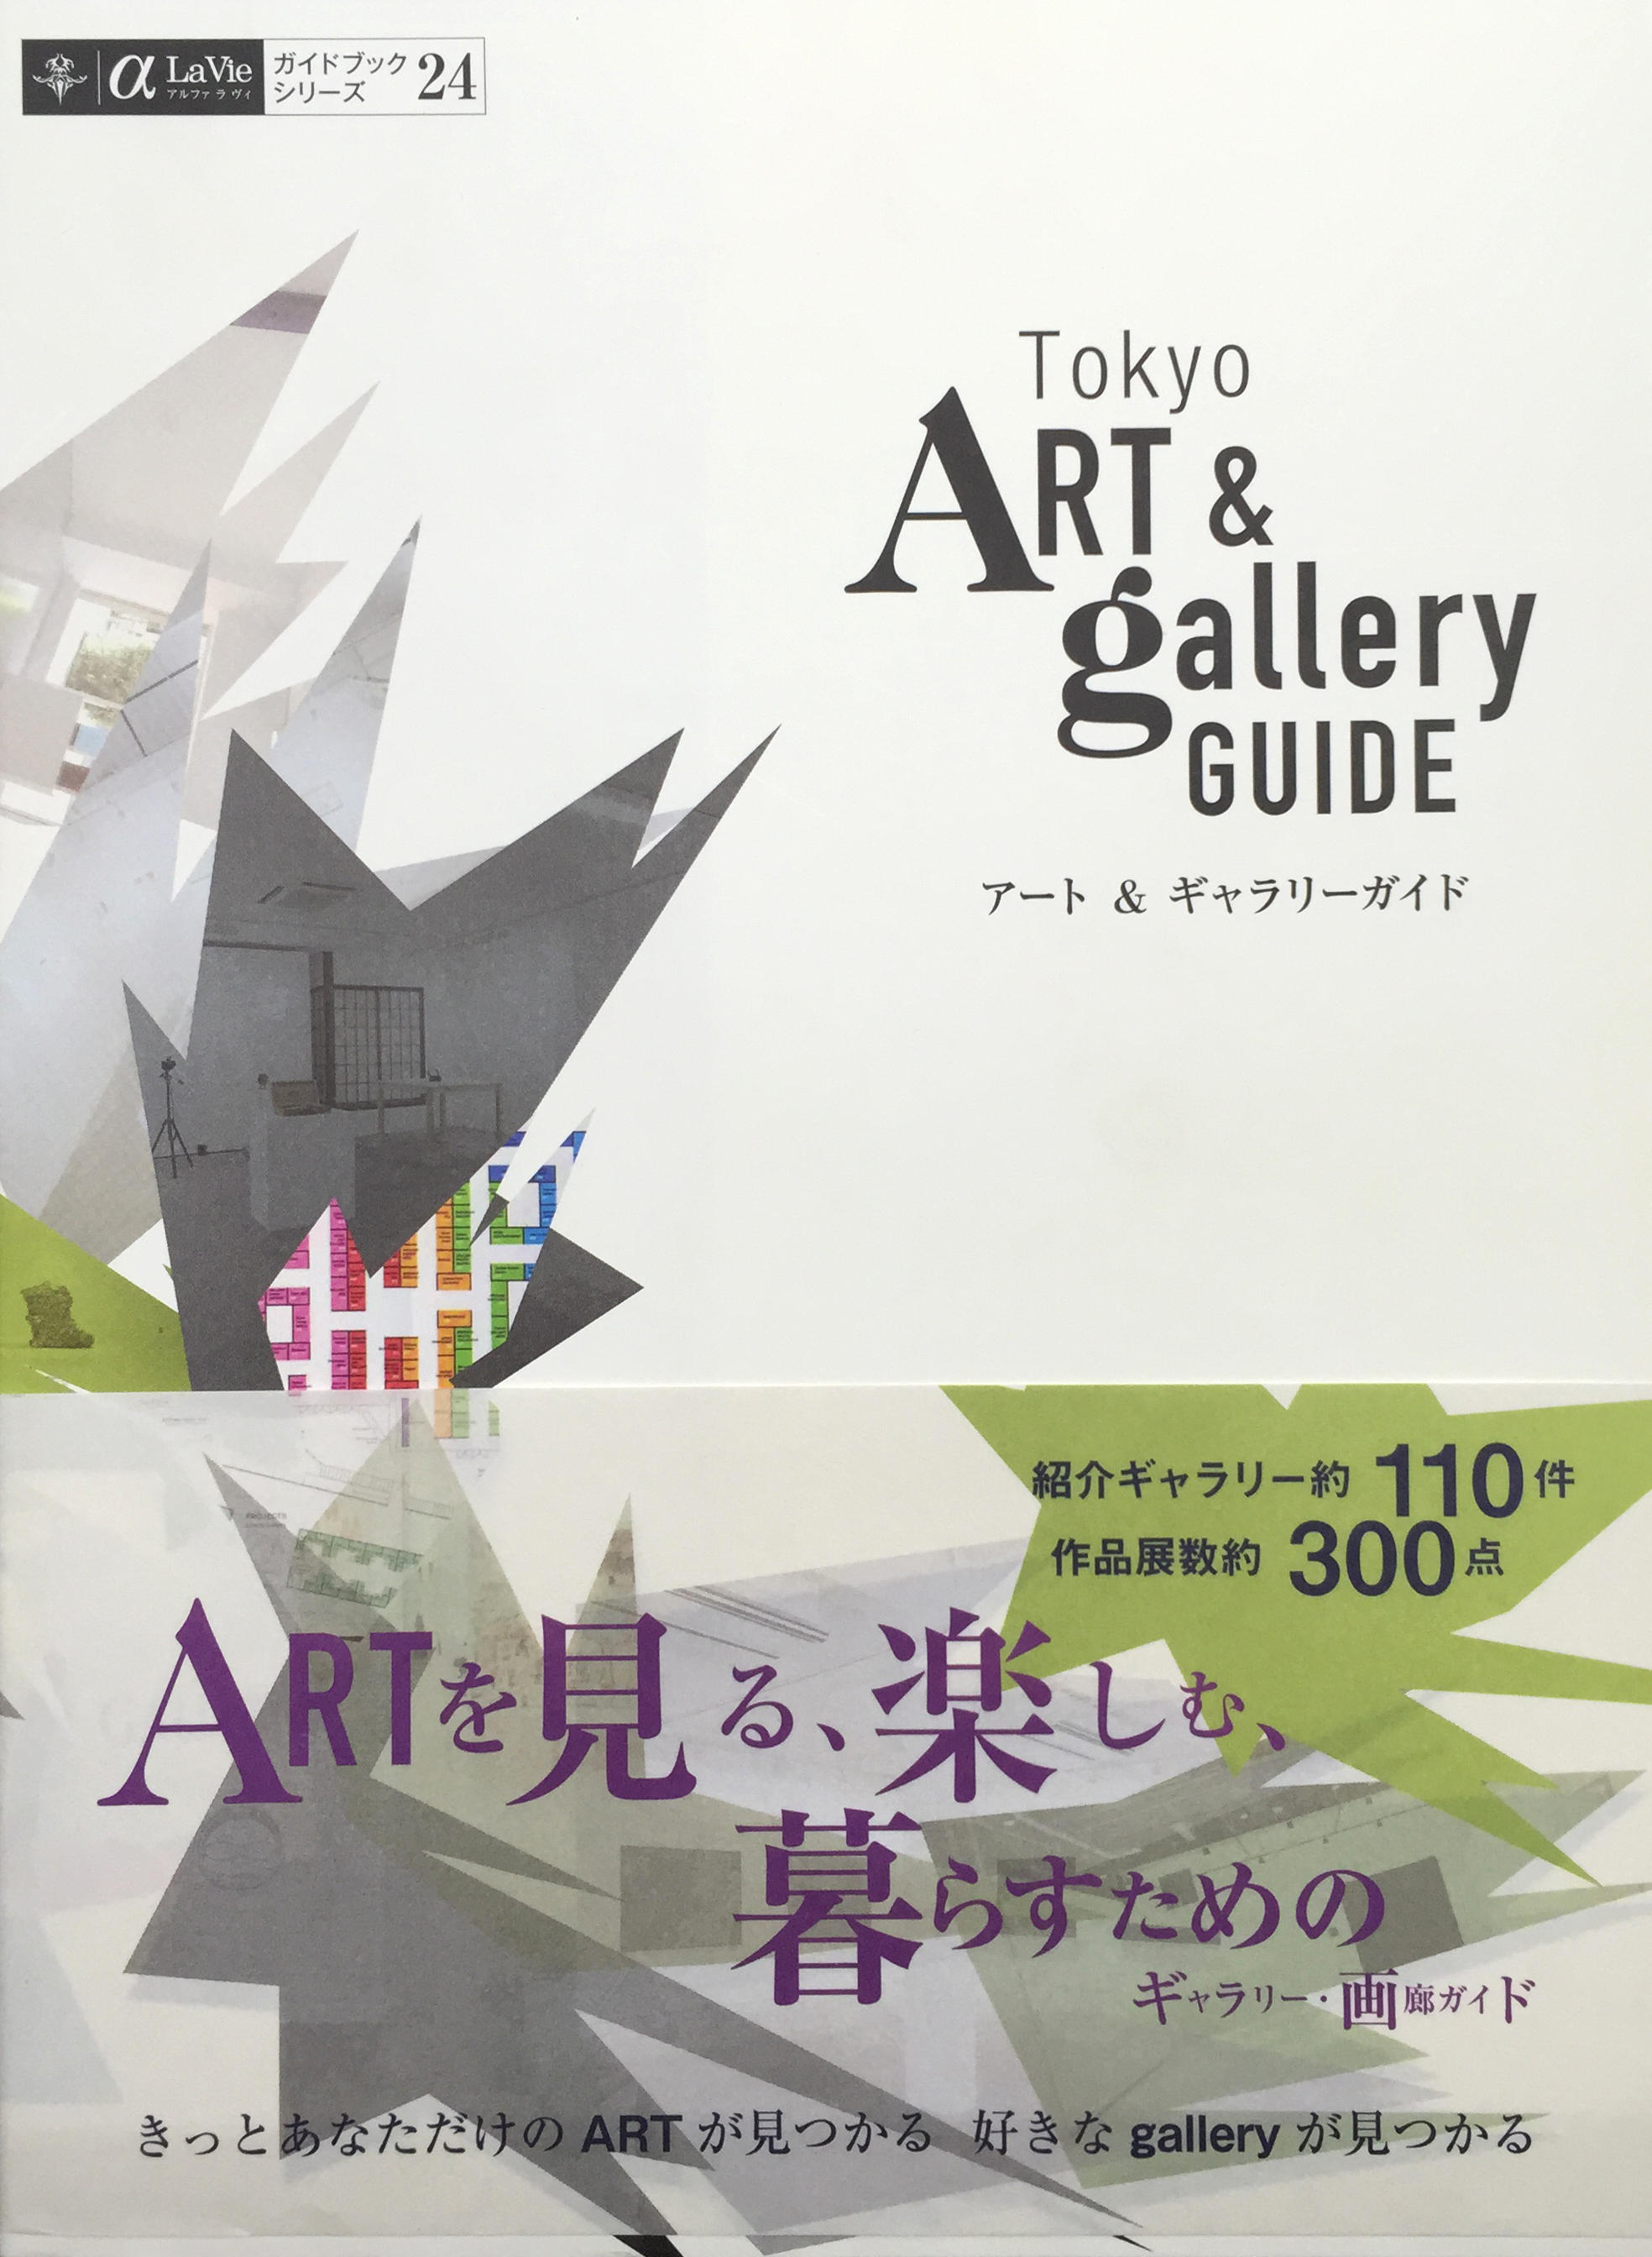 Tokyo ART & gallery GUIDE  アート & ギャラリー ガイド